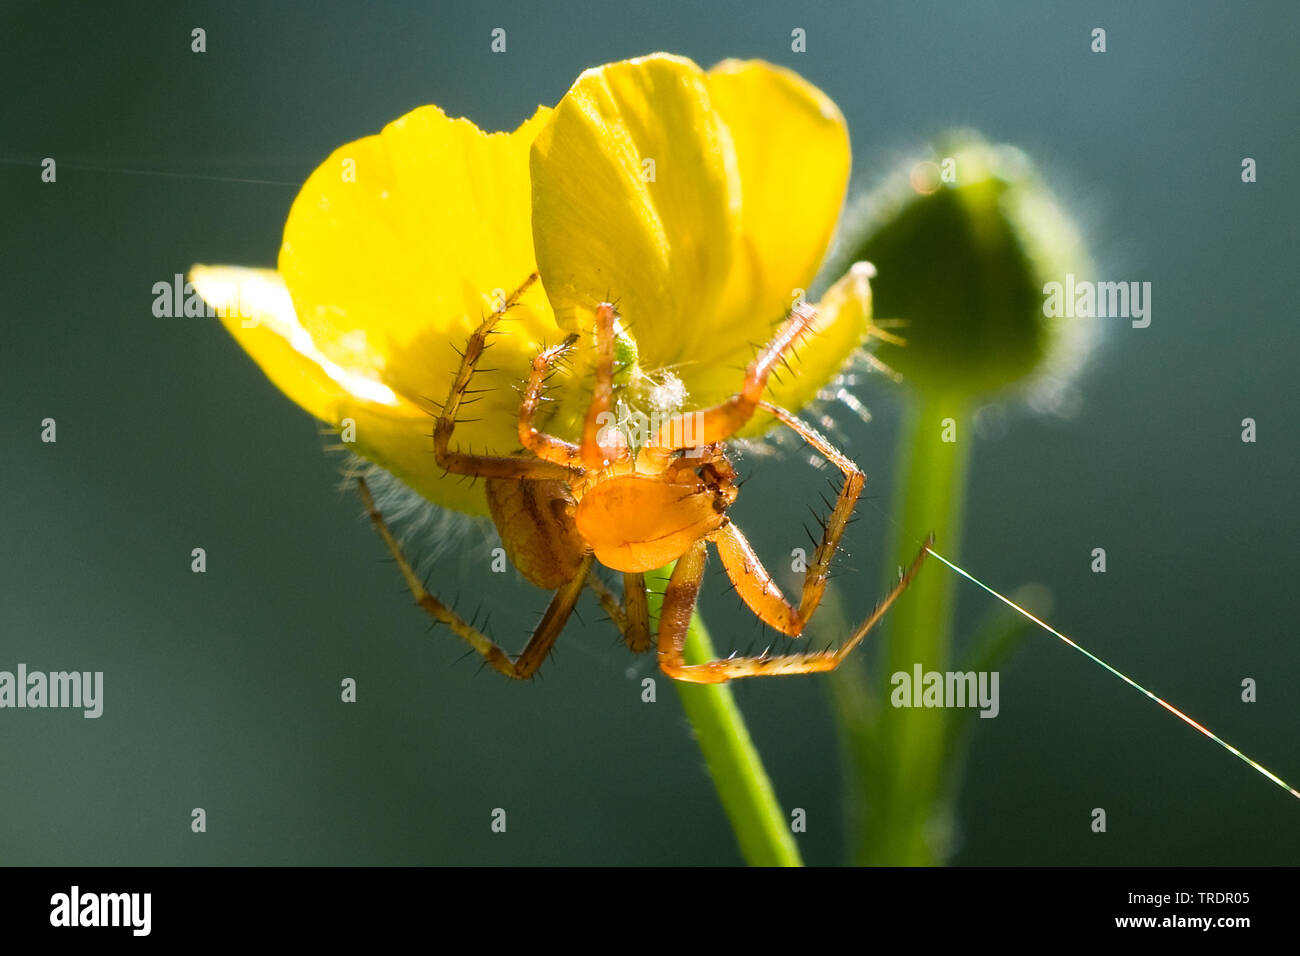 Spider on yellow flower, Hungary Stock Photo